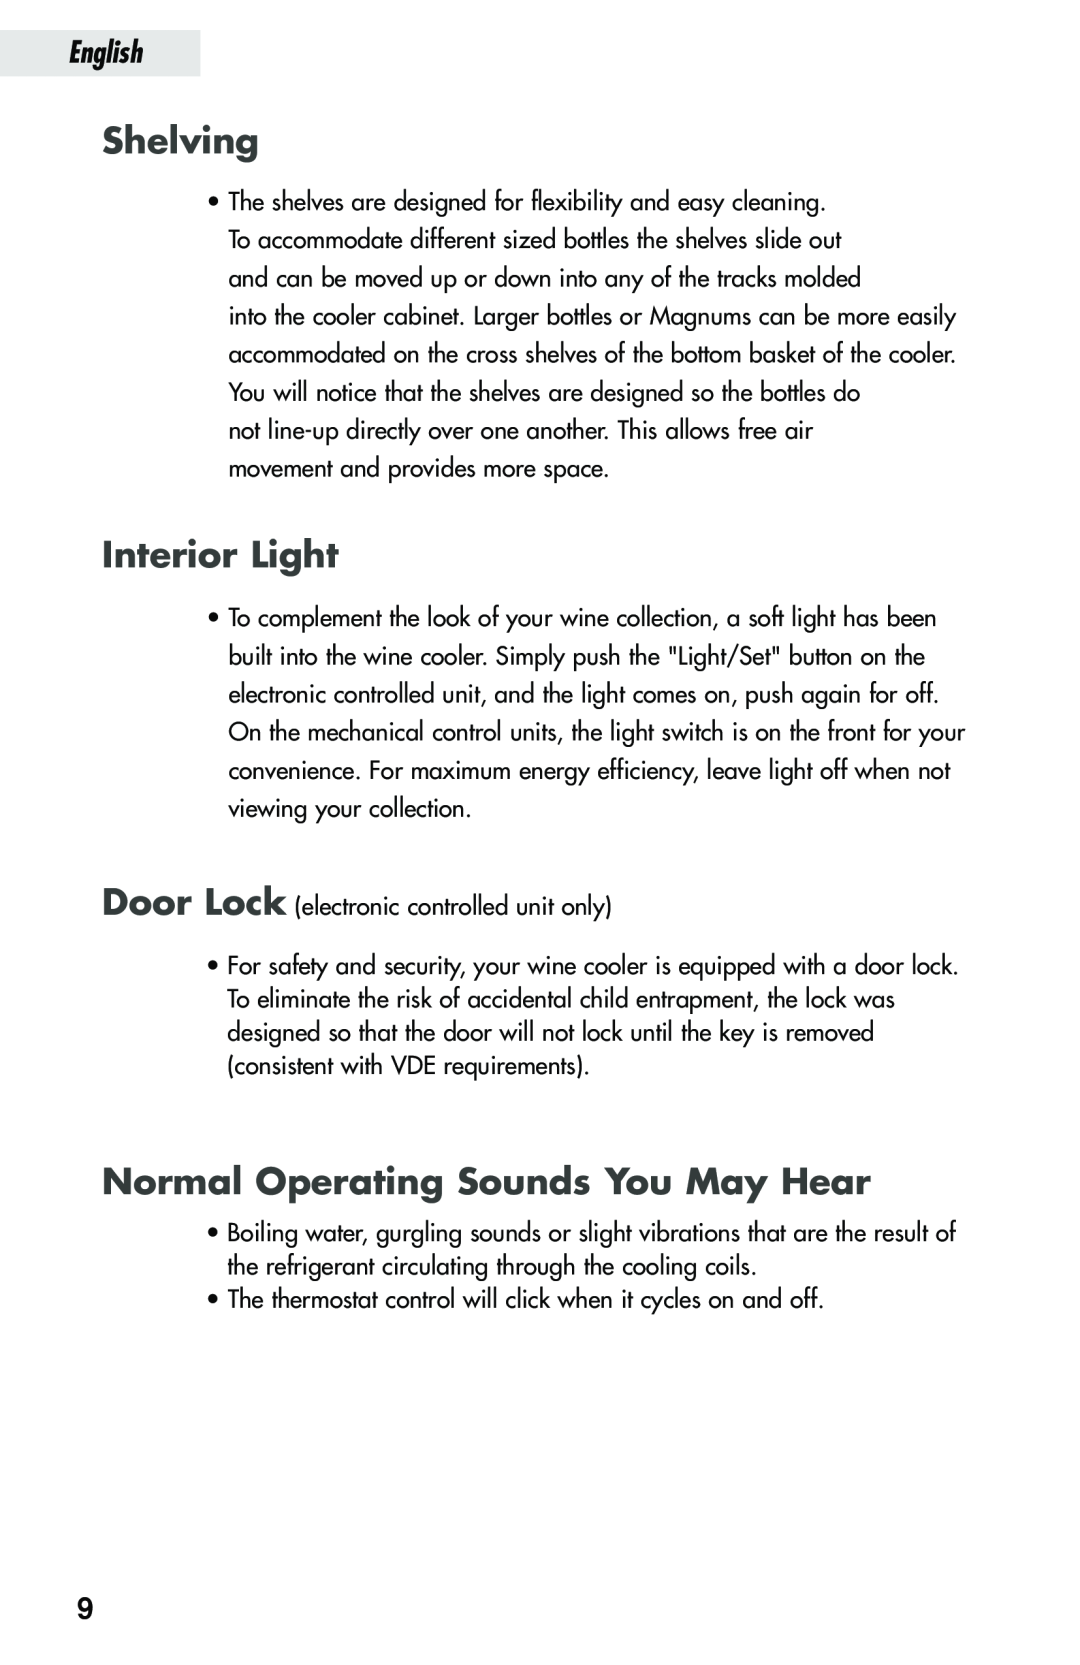 Haier JC-112GA, JC-152GA, JC-82GA manual Shelving, Interior Light, Normal Operating Sounds You May Hear, English 